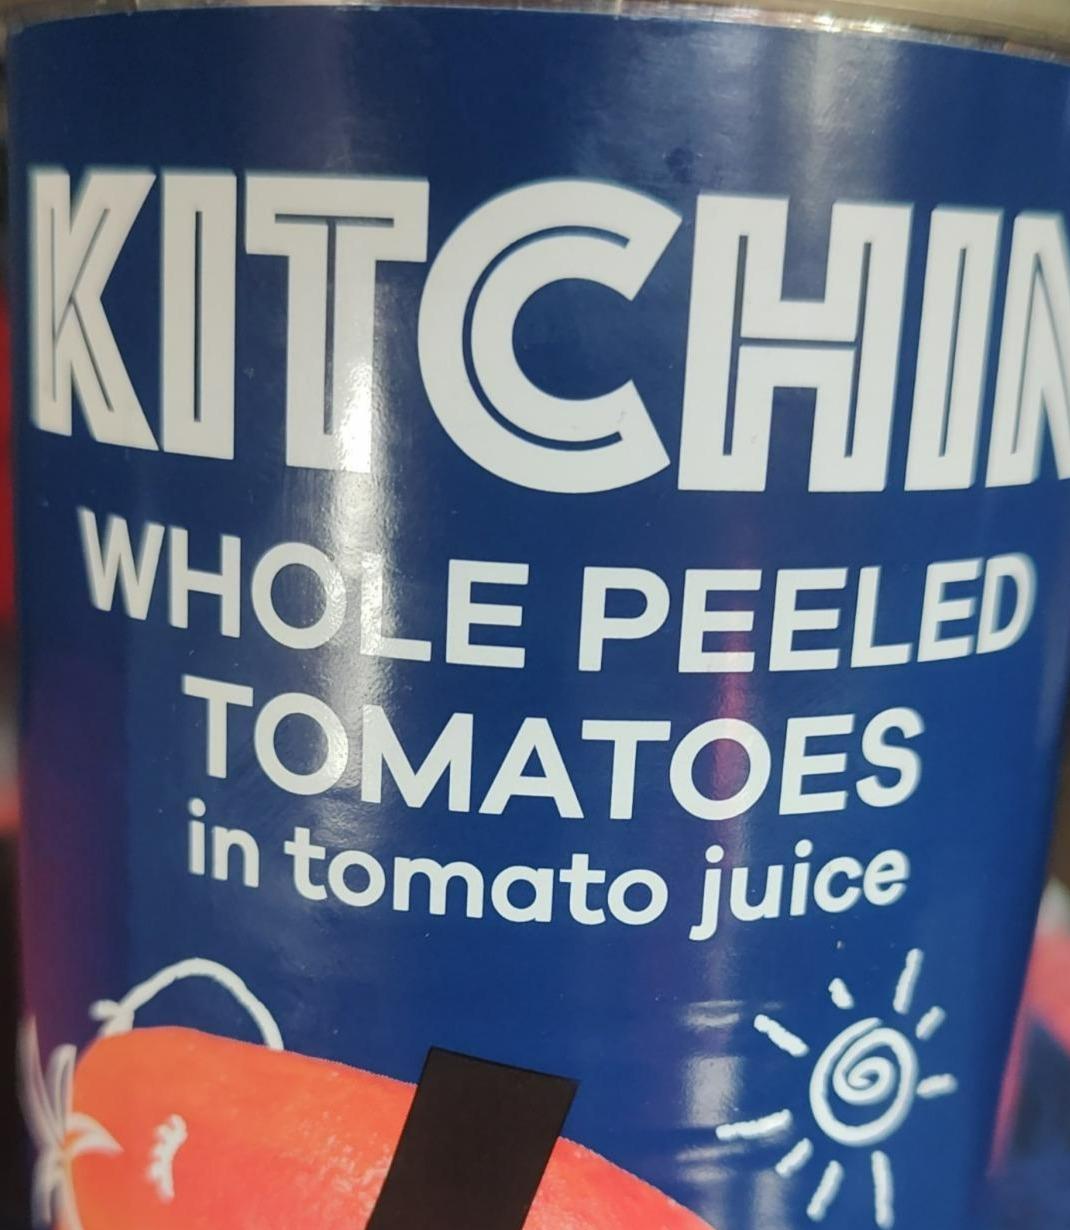 Fotografie - Whole peeled tomatoes in tomato juice Kitchin